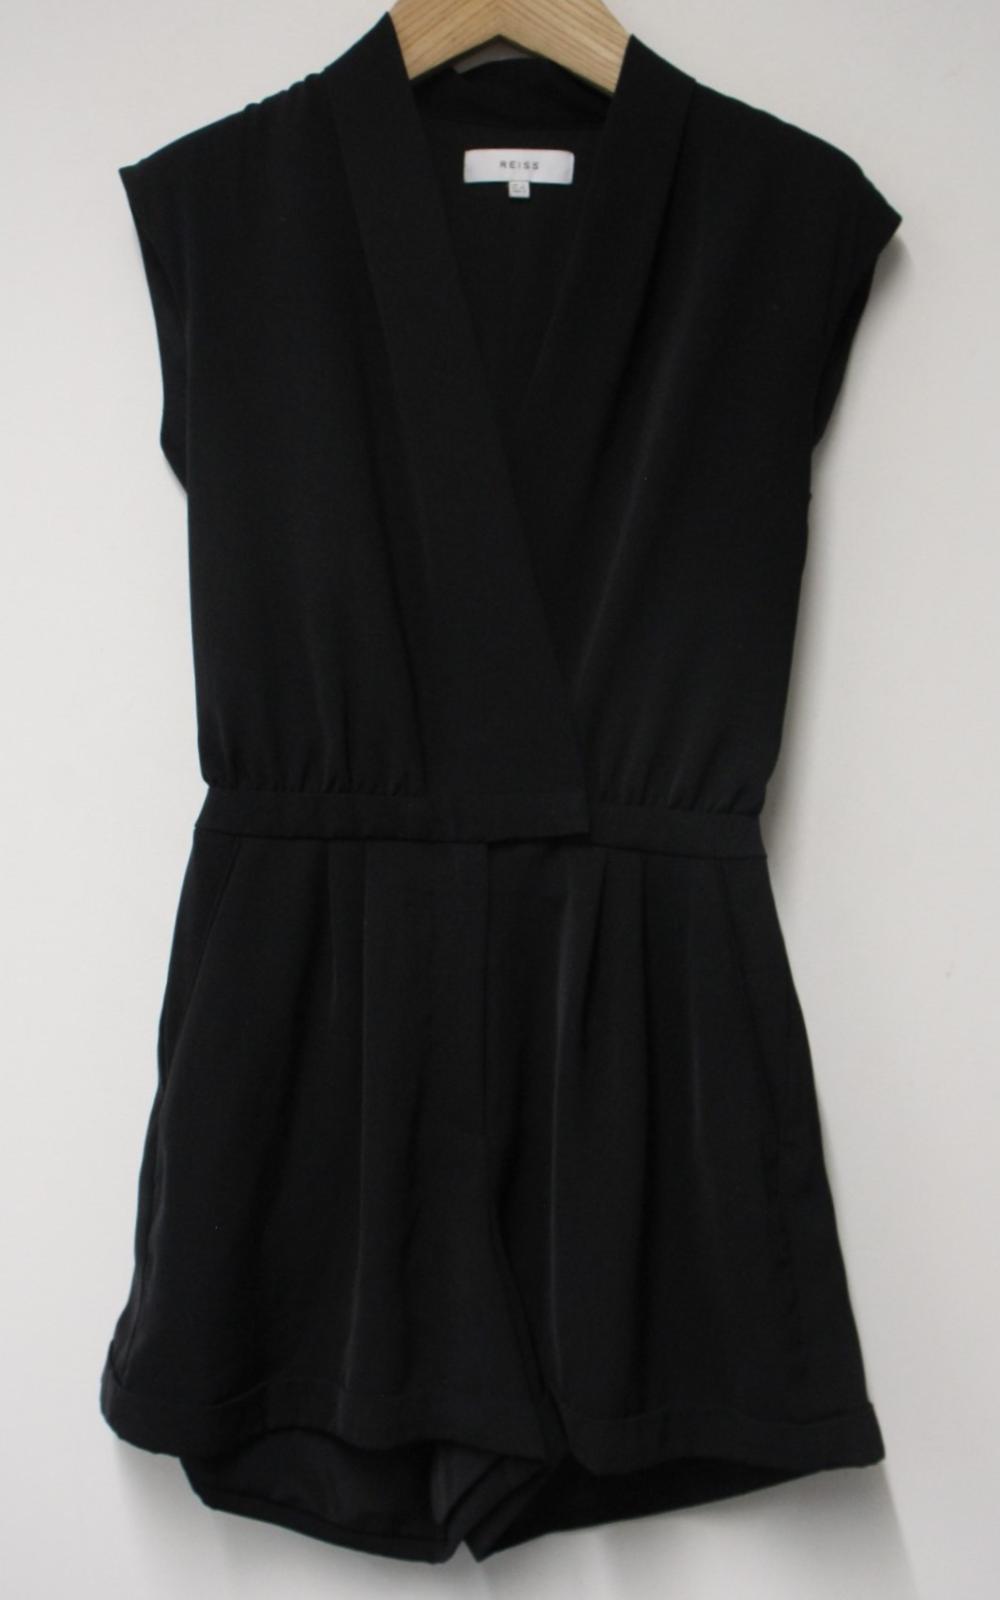 REISS Ladies Black Sleeveless Fit & Flare Louise Playsuit Bodysuit Size UK6